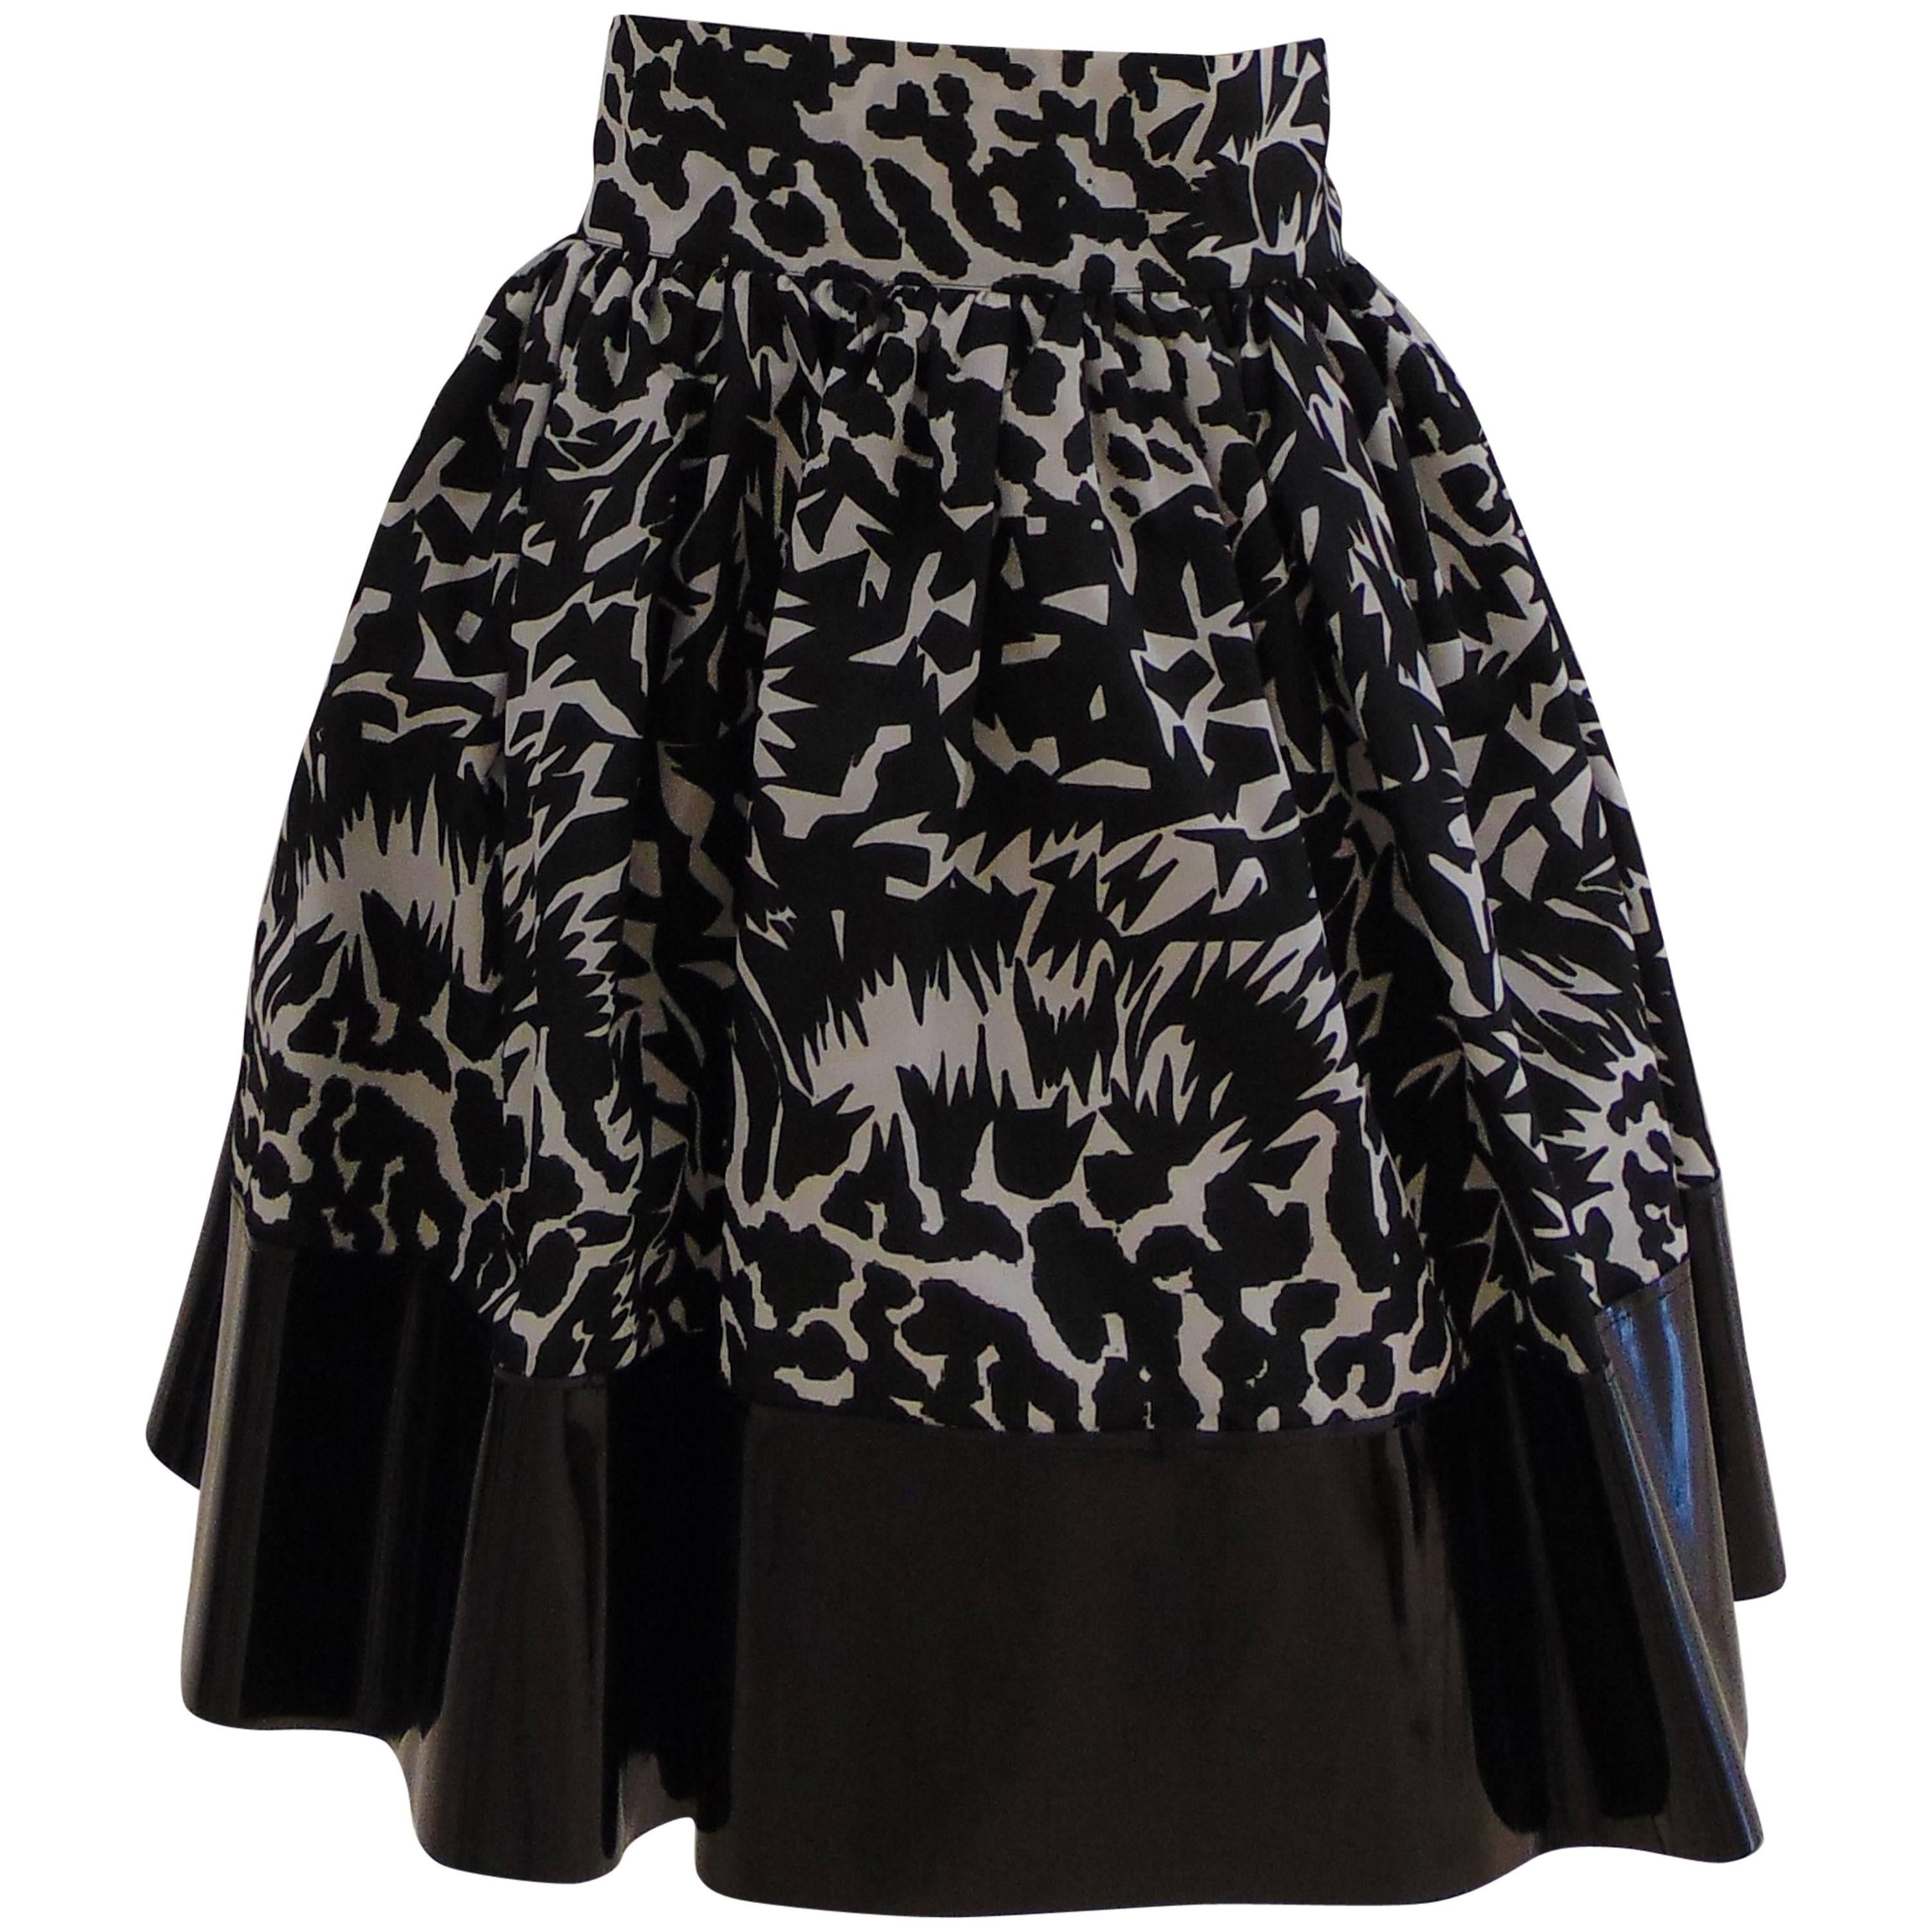 Leitmotiv unworn/nwot skirt with vernish ecoleather details